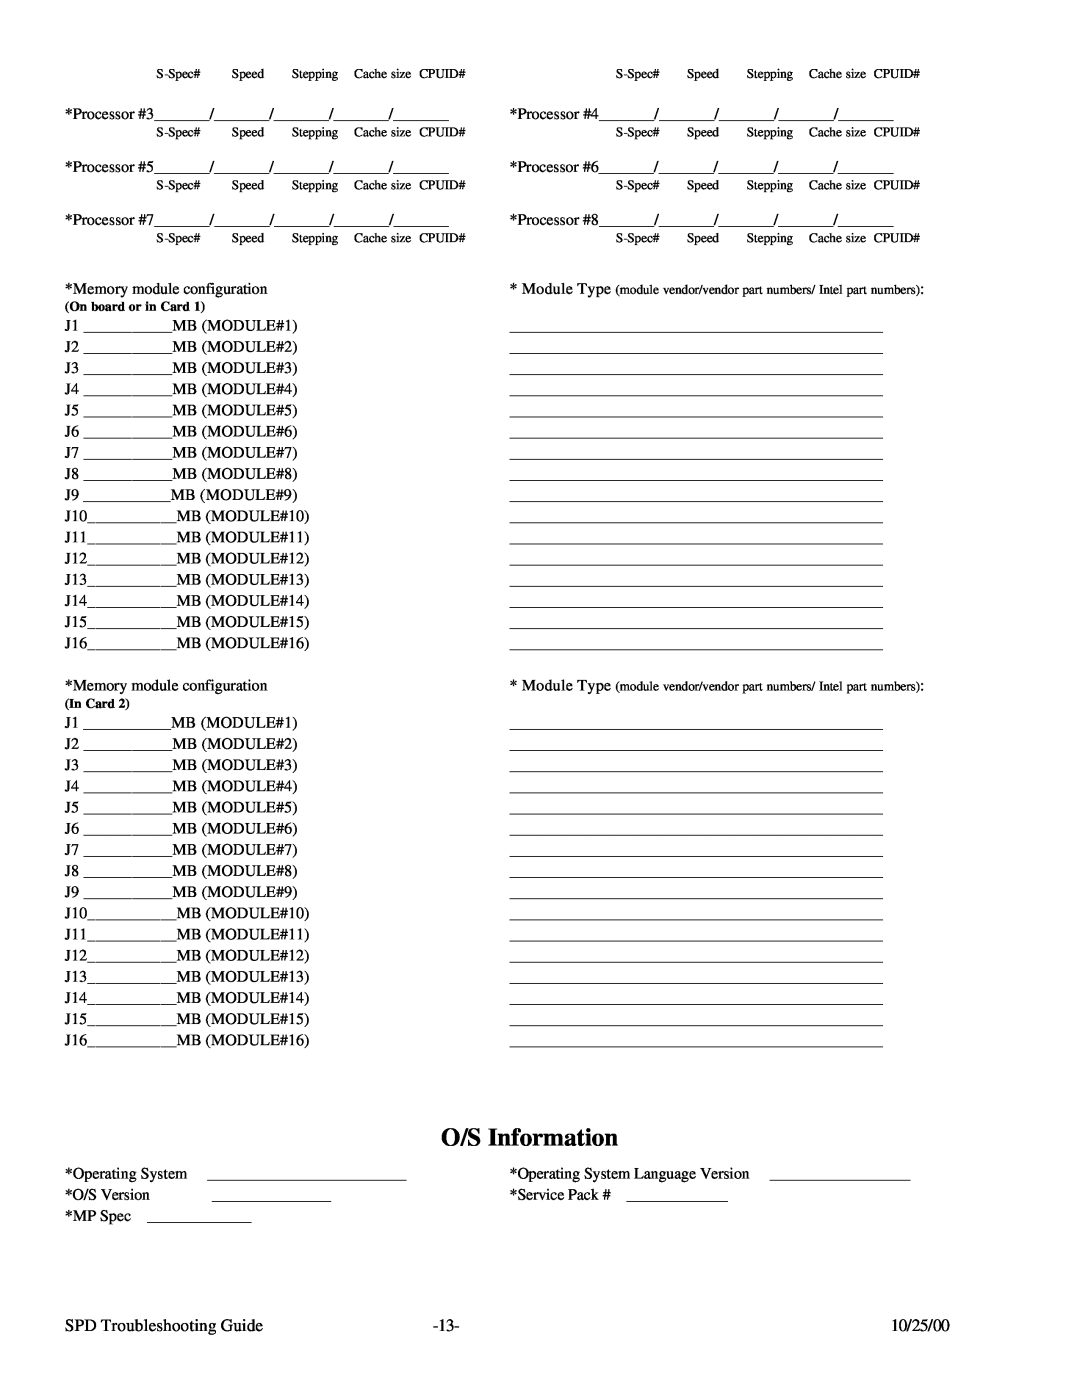 Intel SKA4 manual O/S Information, SPD Troubleshooting Guide, 10/25/00 